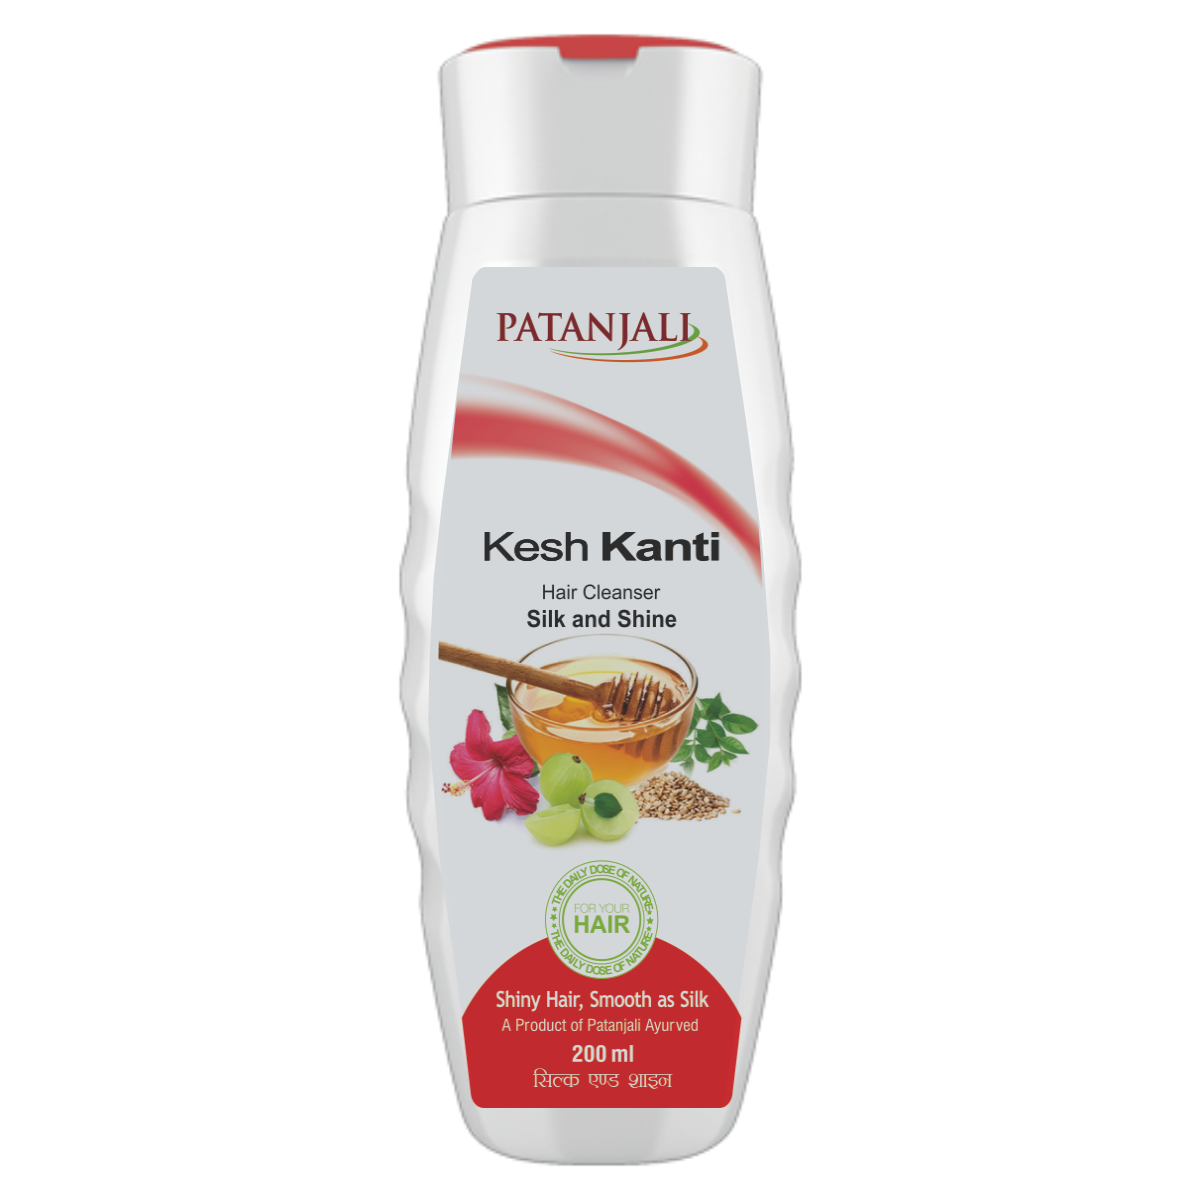 Patanjali Kesh Kanti Hair Cleanser Silk & Shine 